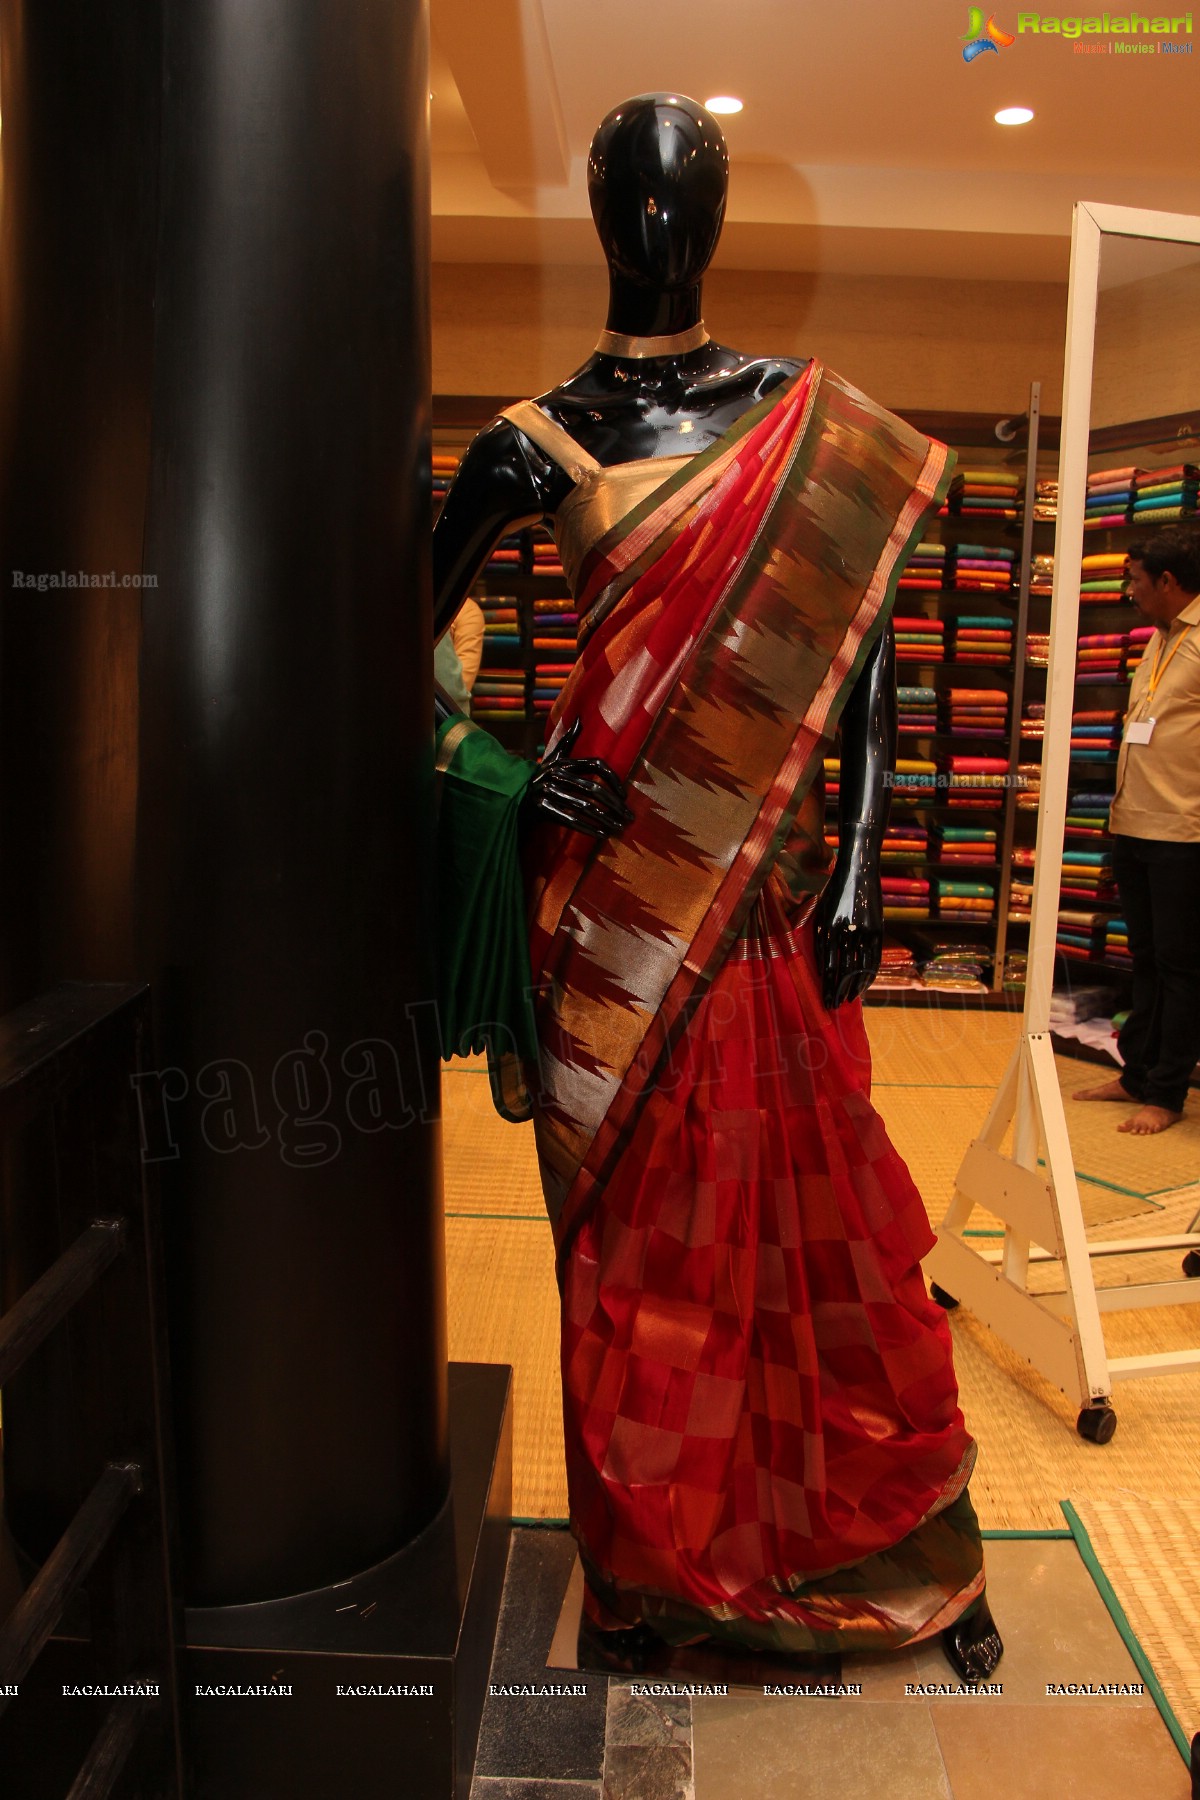 Kancheepuram Varamahalakshmi Silks Launch, Hyderabad